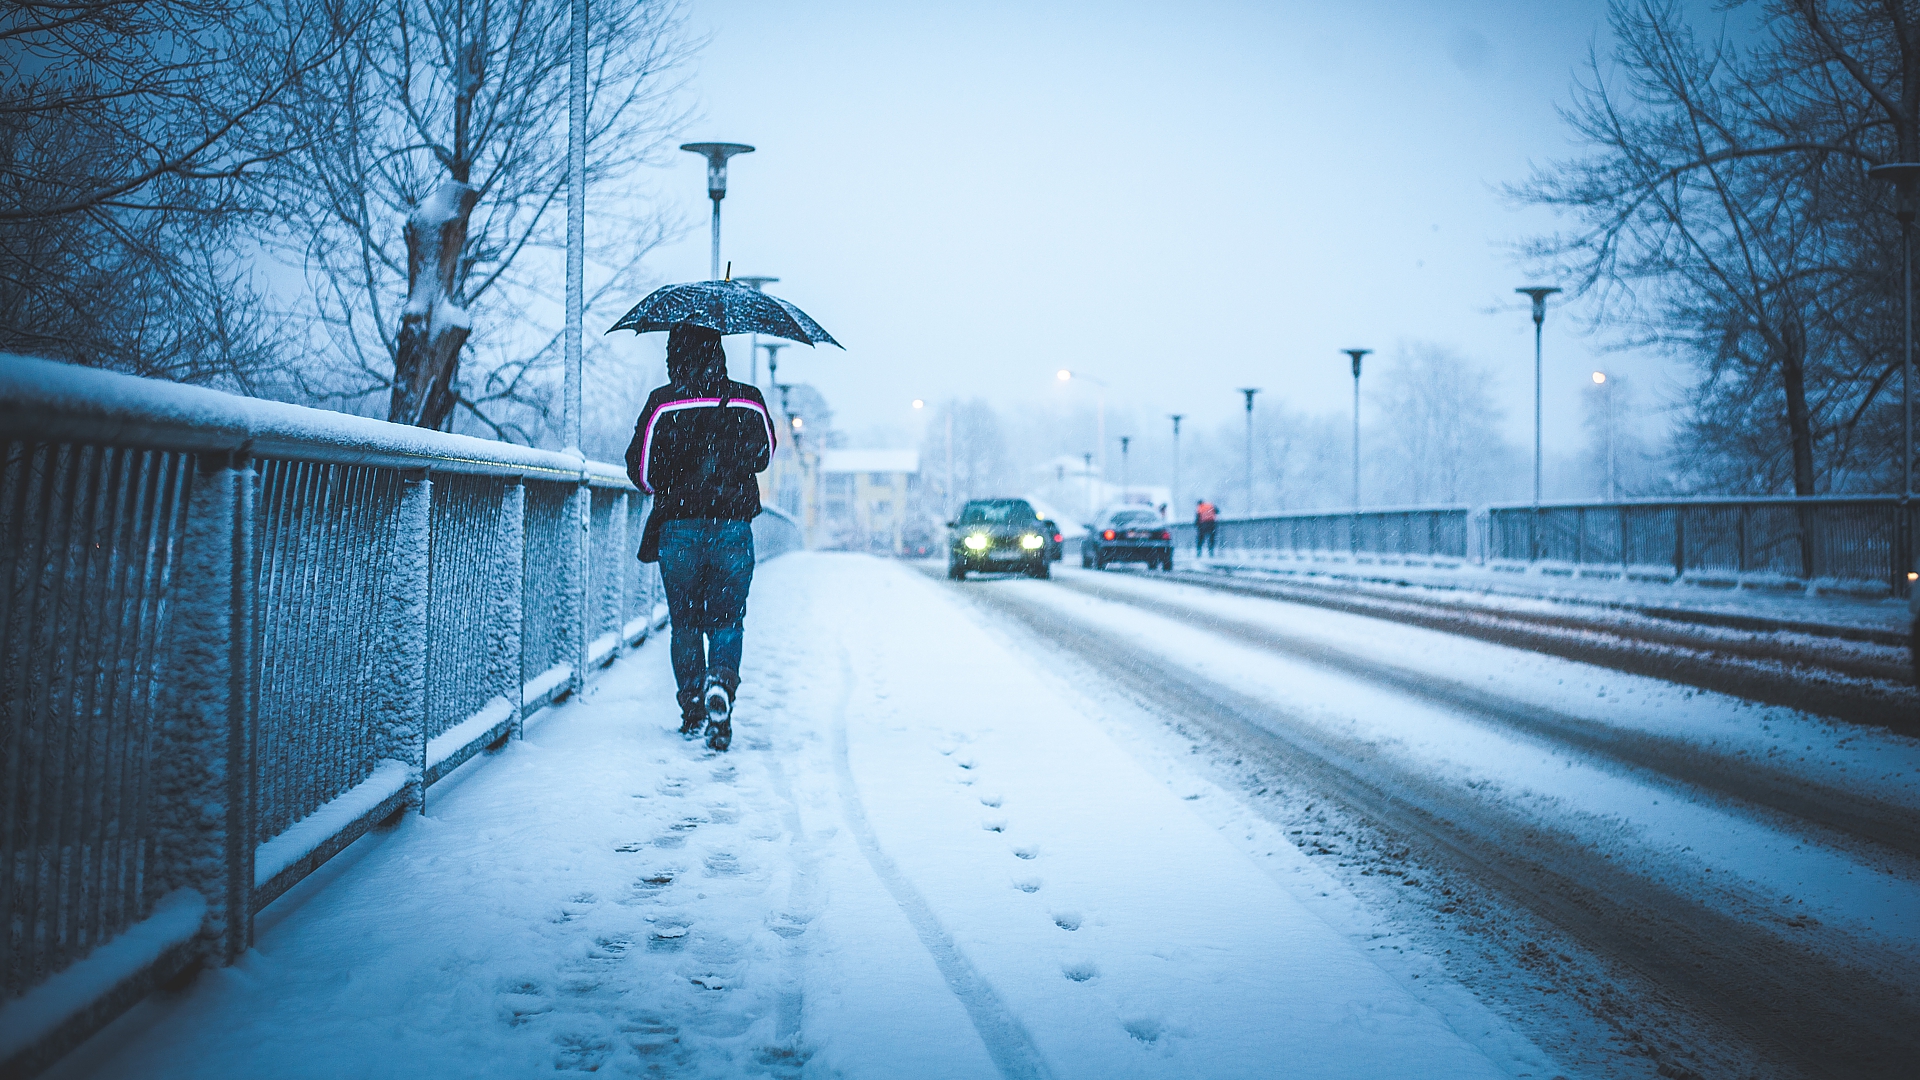 photography, winter, bridge, car, footprint, snow, umbrella